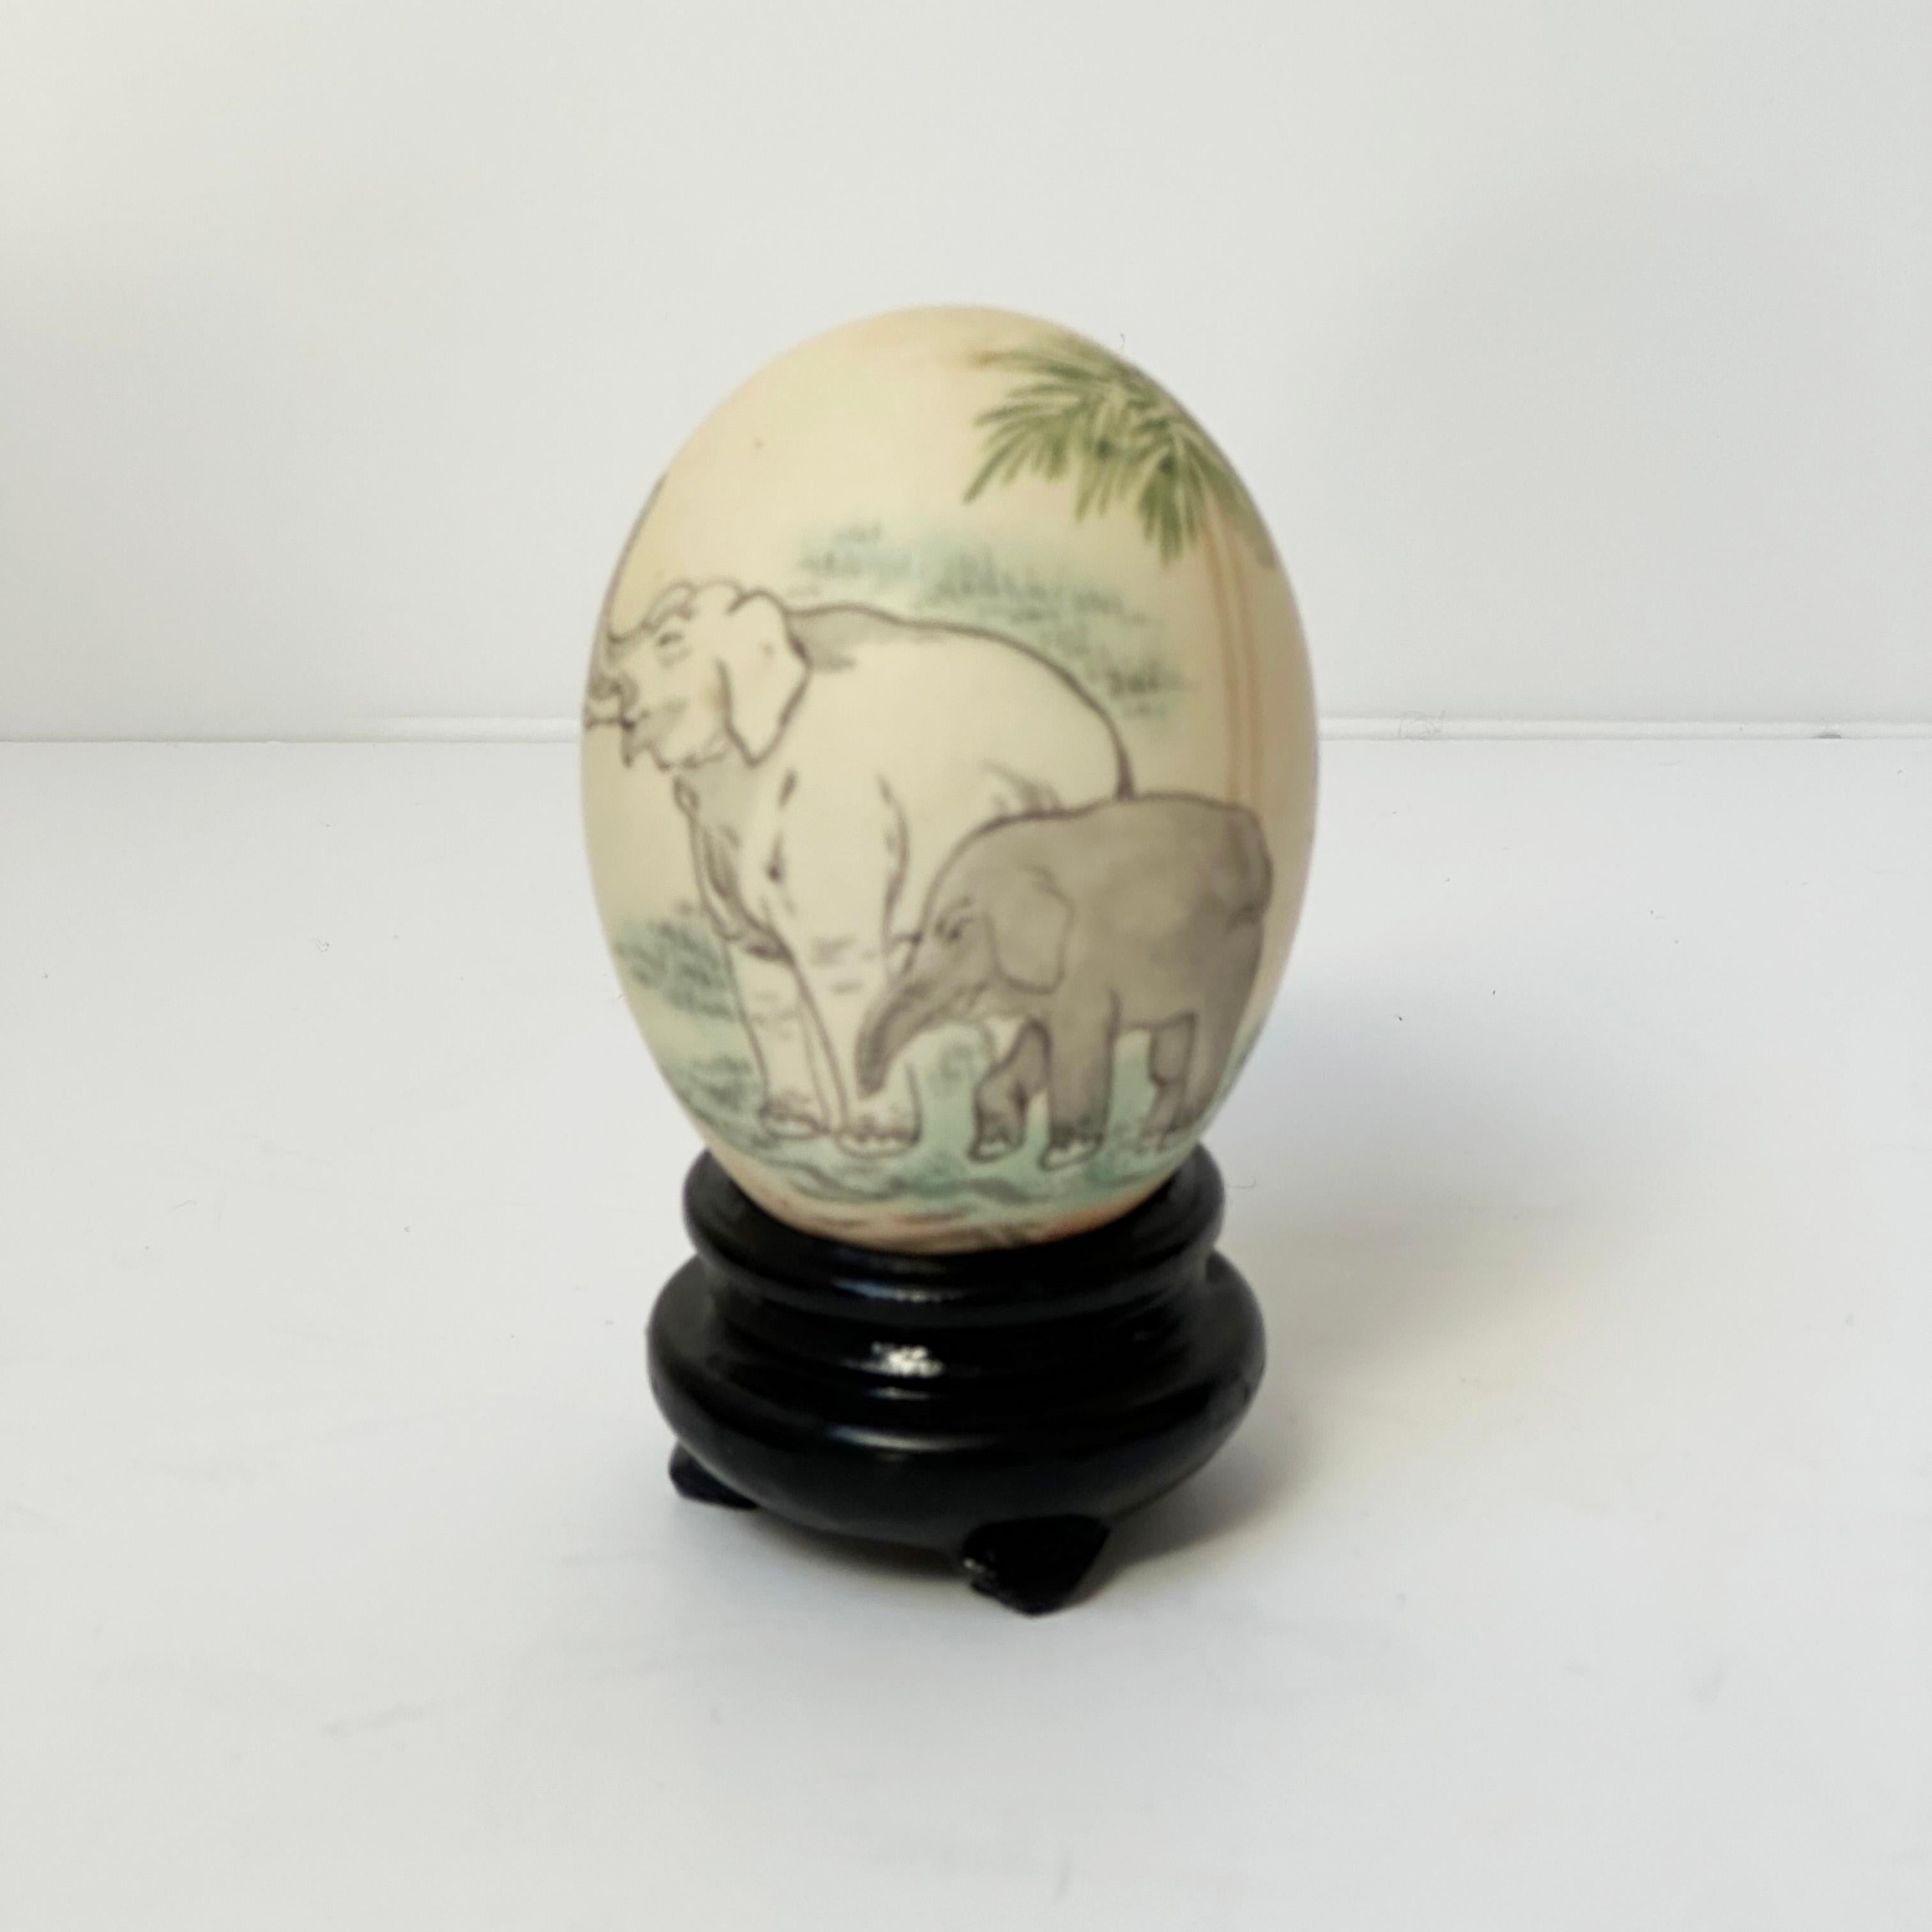 Vintage Chinese Painted Eggshells on Wooden Display Plinths - Set of 6 1